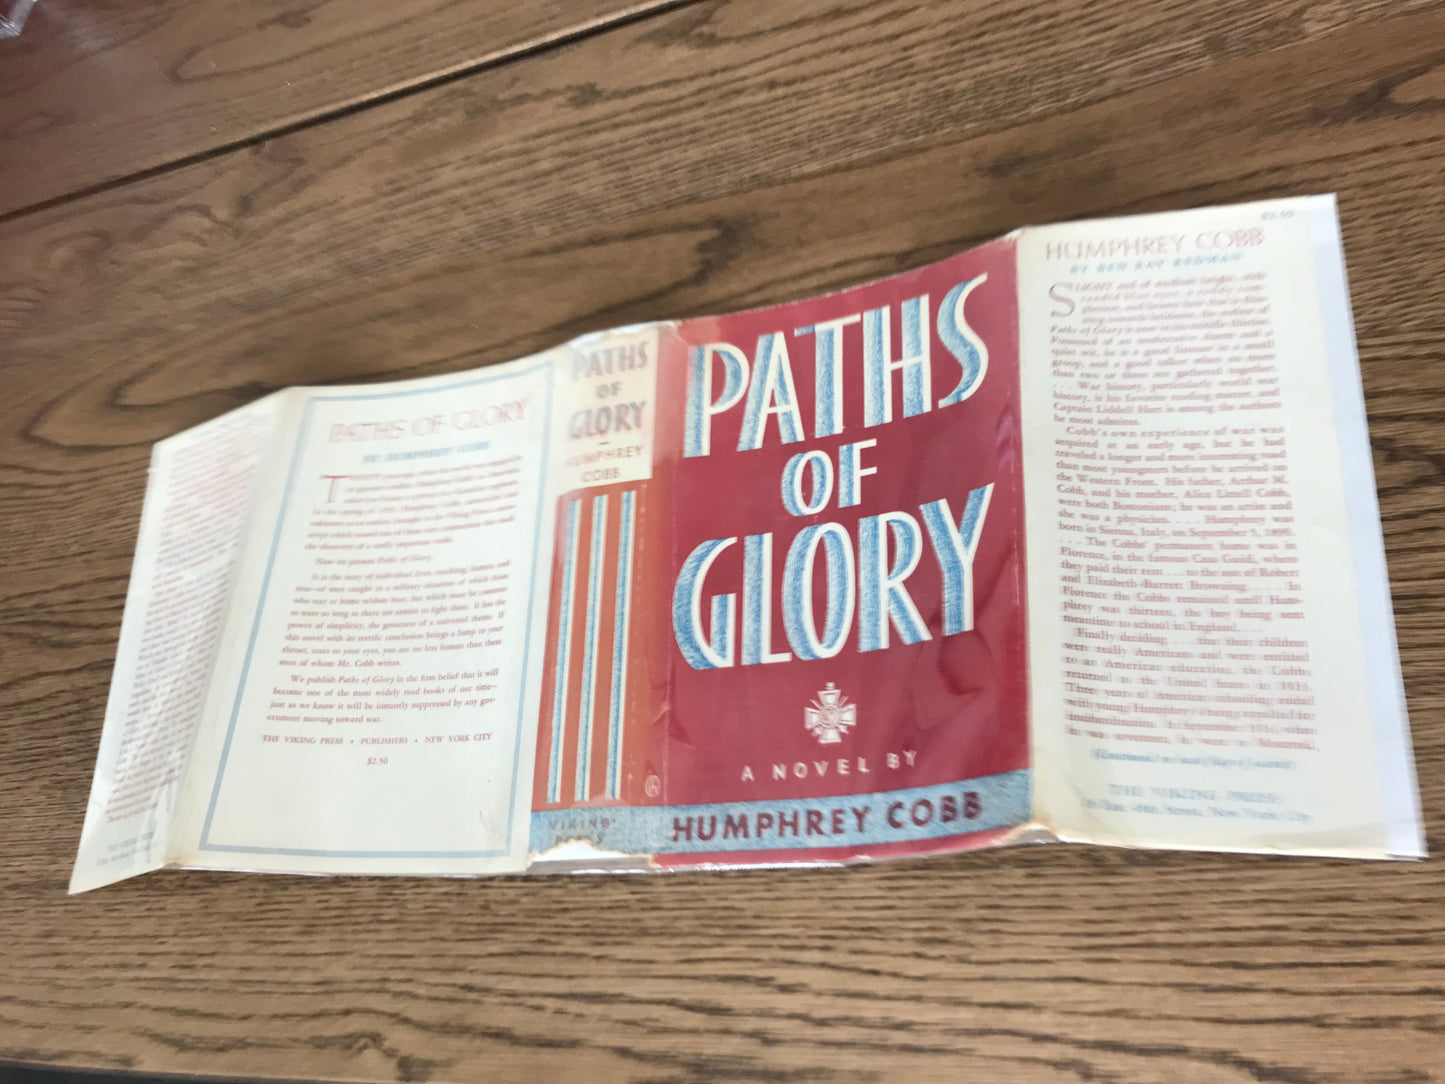 PATHS OF GLORY -            HUMPHREY COBB BooksCardsNBikes